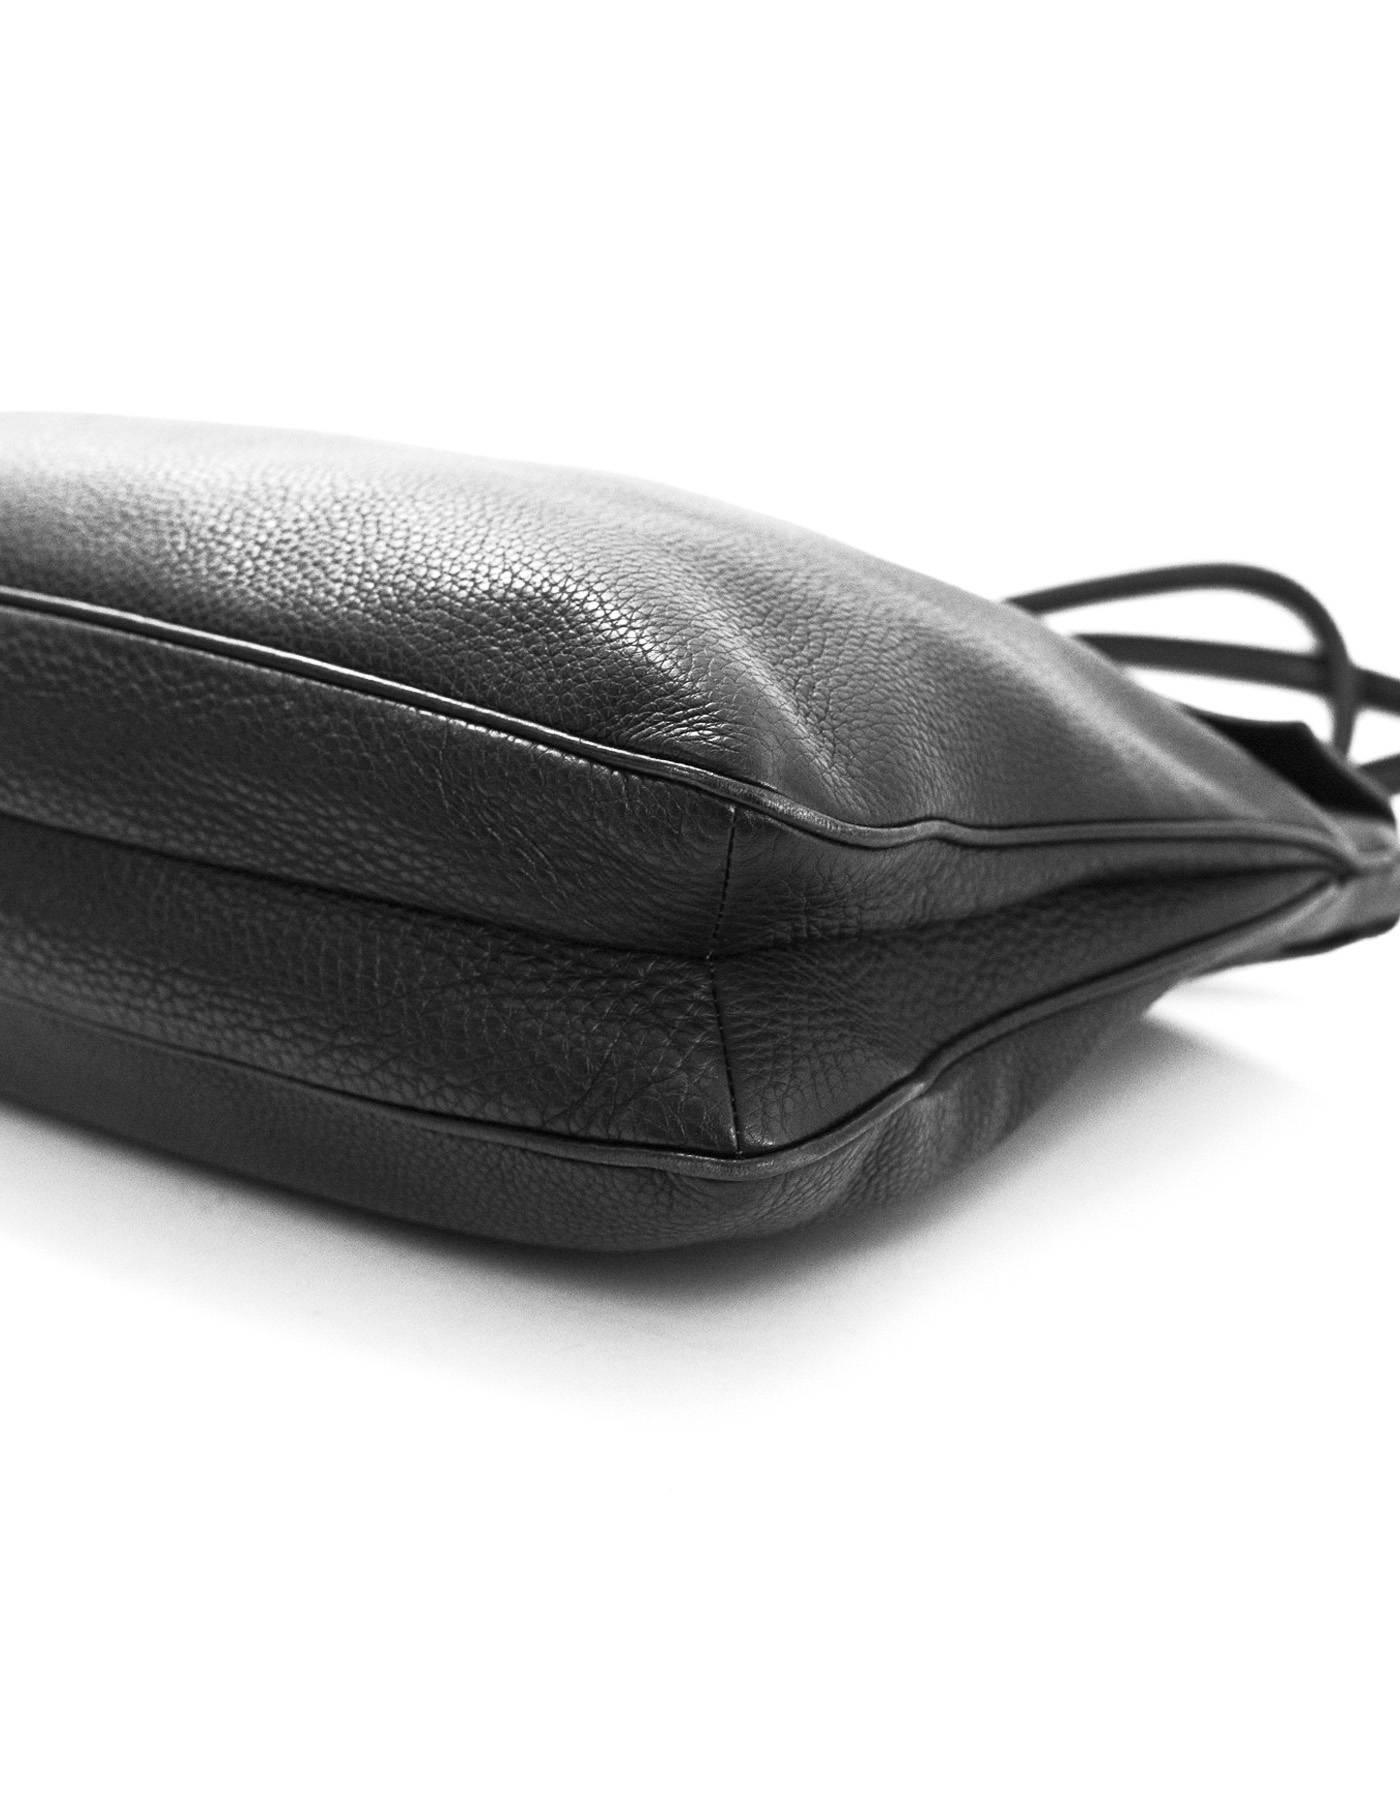 Prada Black Leather Tote Bag 1